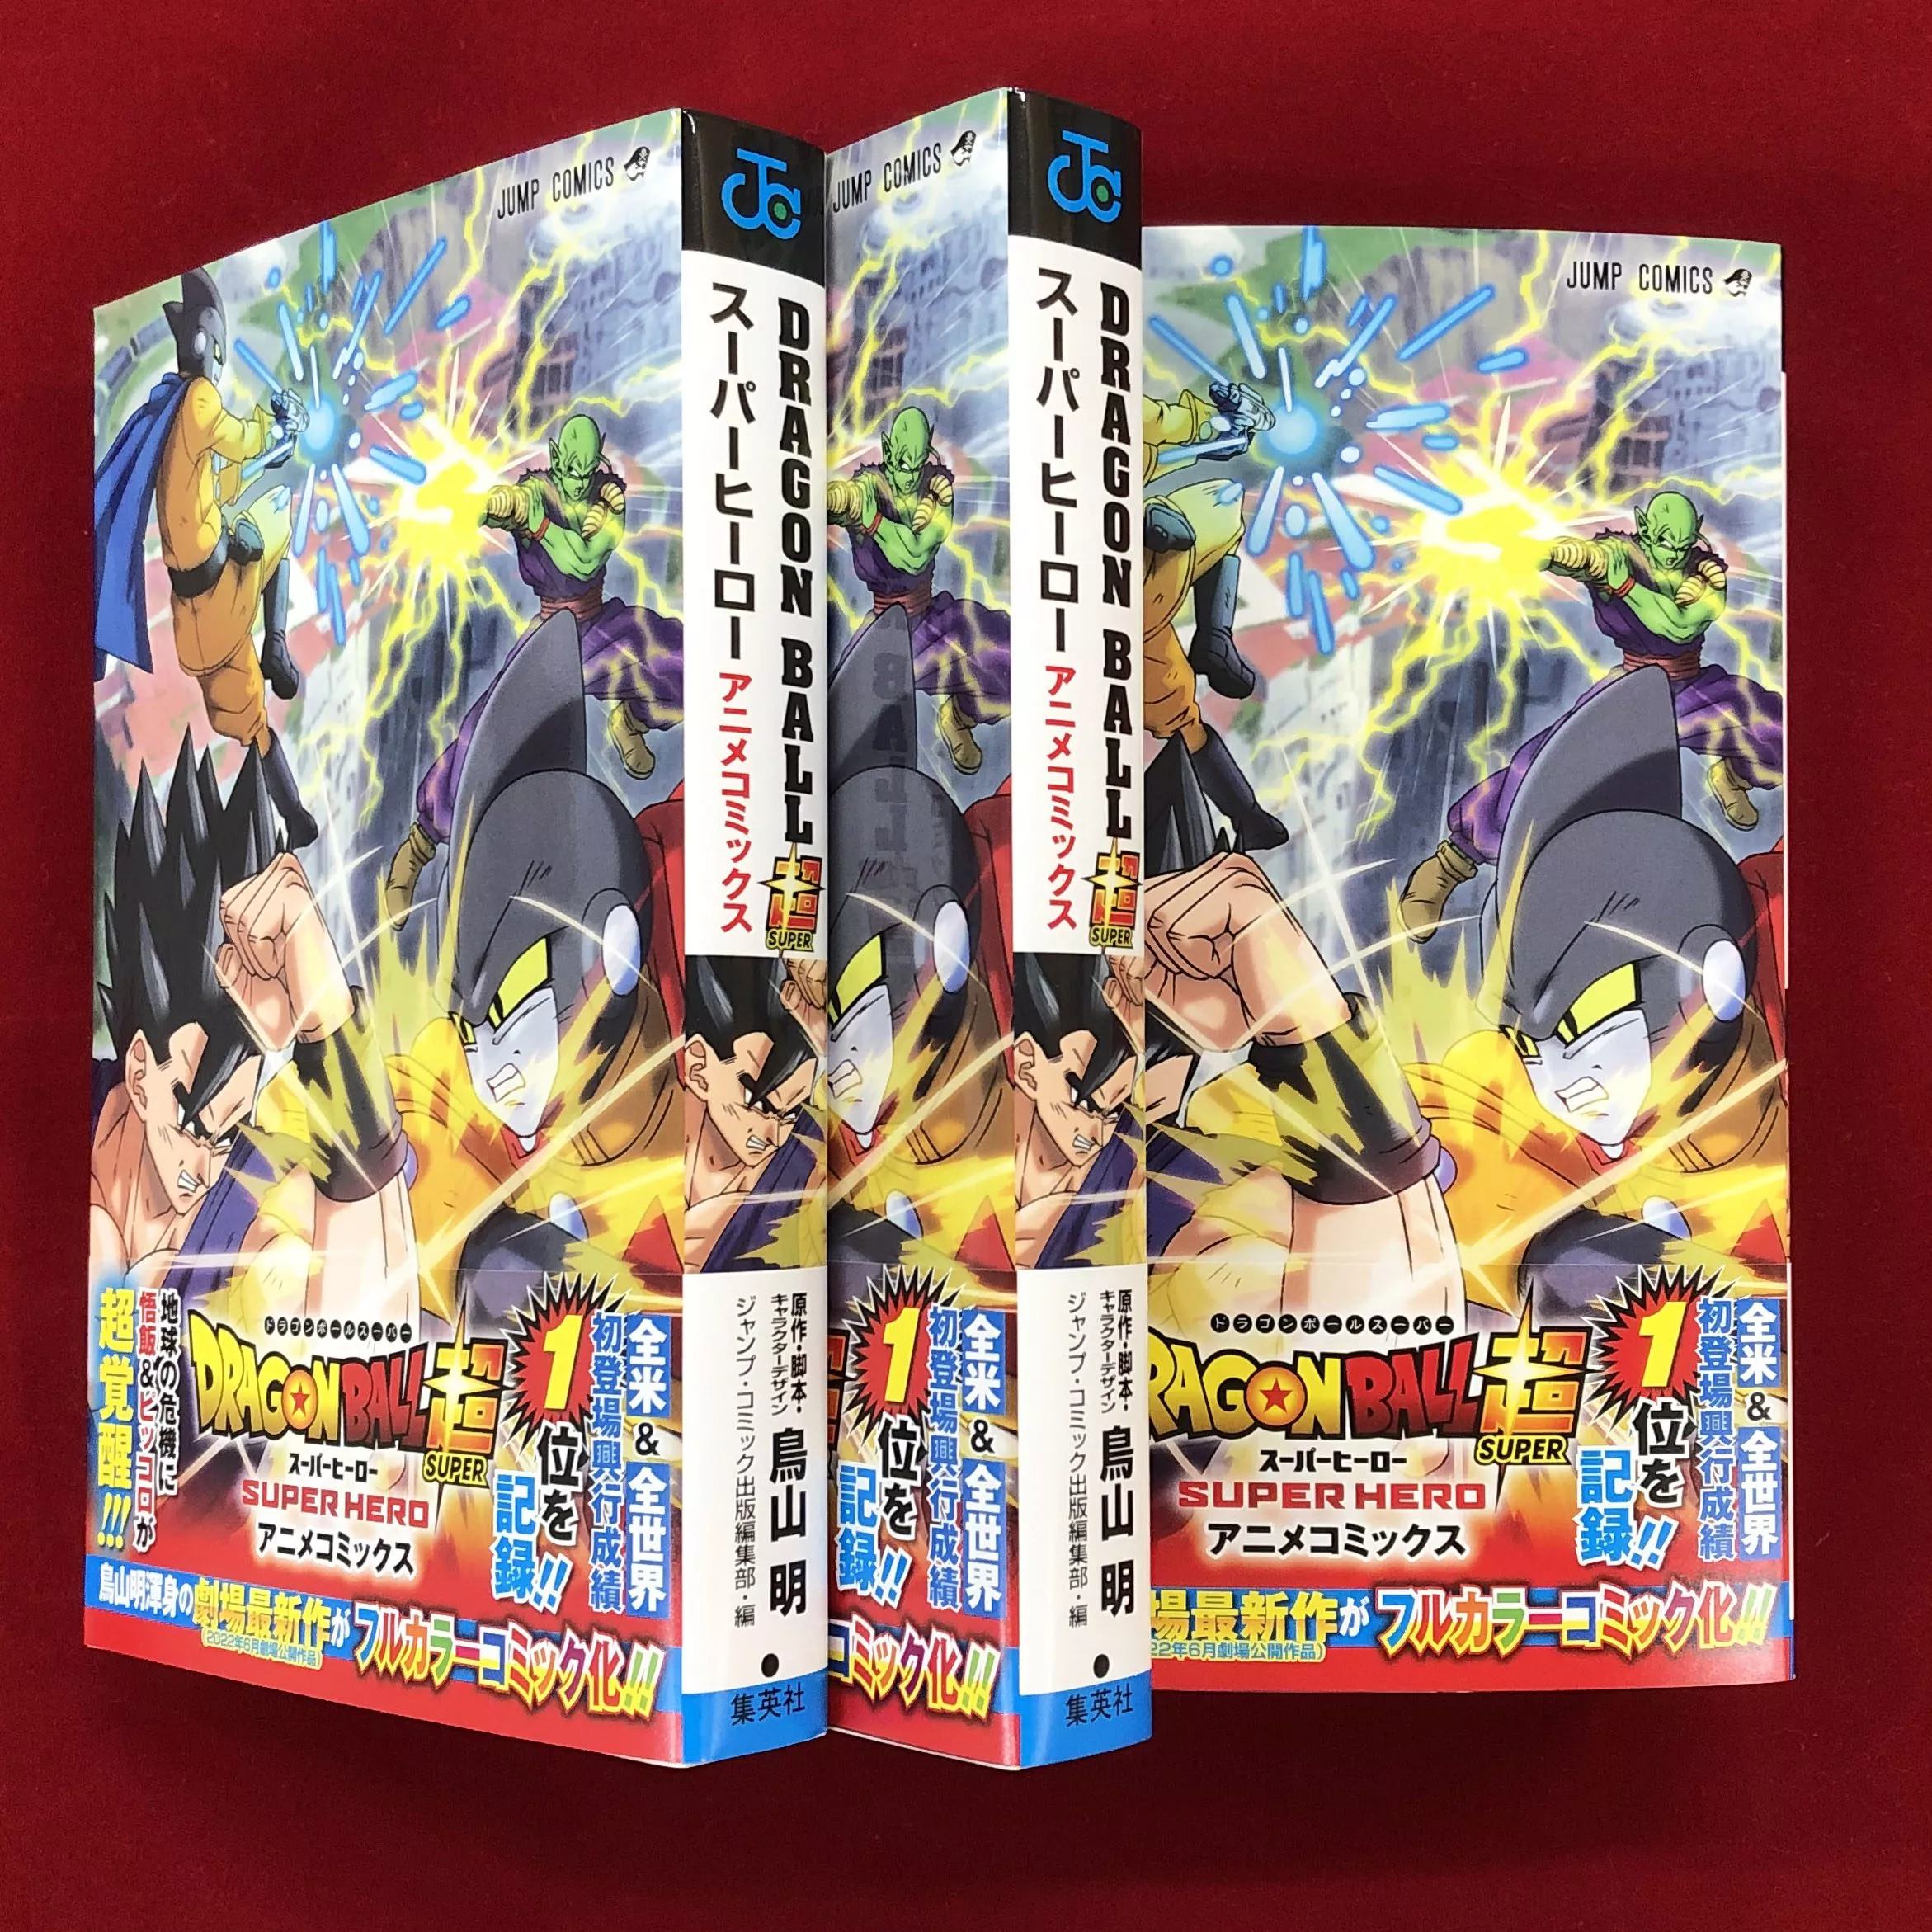 Dragon Ball Super: Super Hero Anime Comic